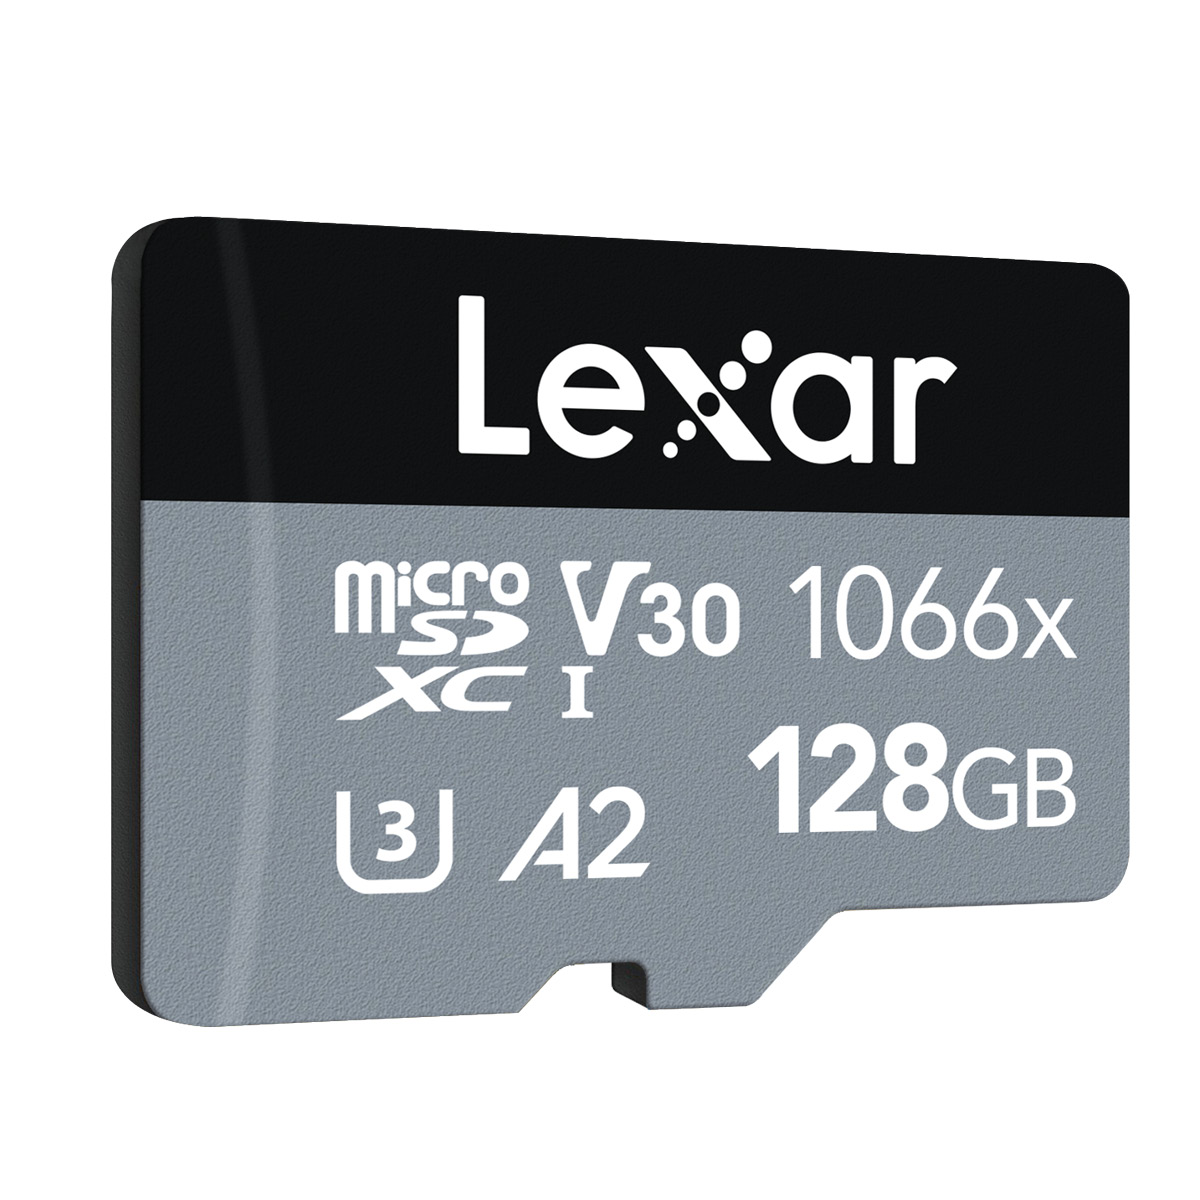 Lexar 128 GB Micro SDXC Pro Silver 1066x